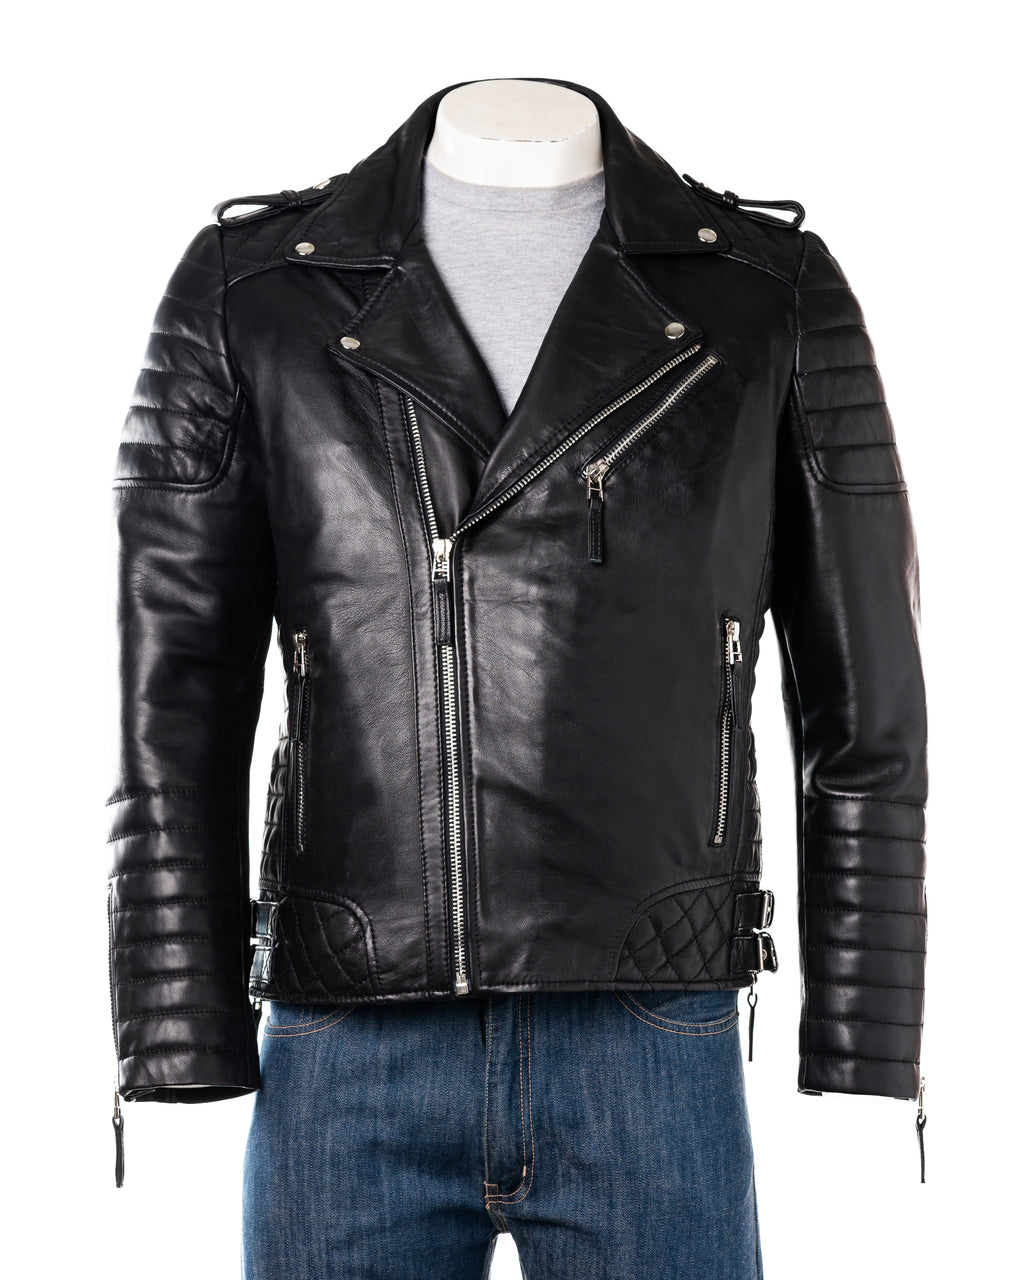 Men's Black Diamond Stitch Biker Style Leather Jacket: Burton